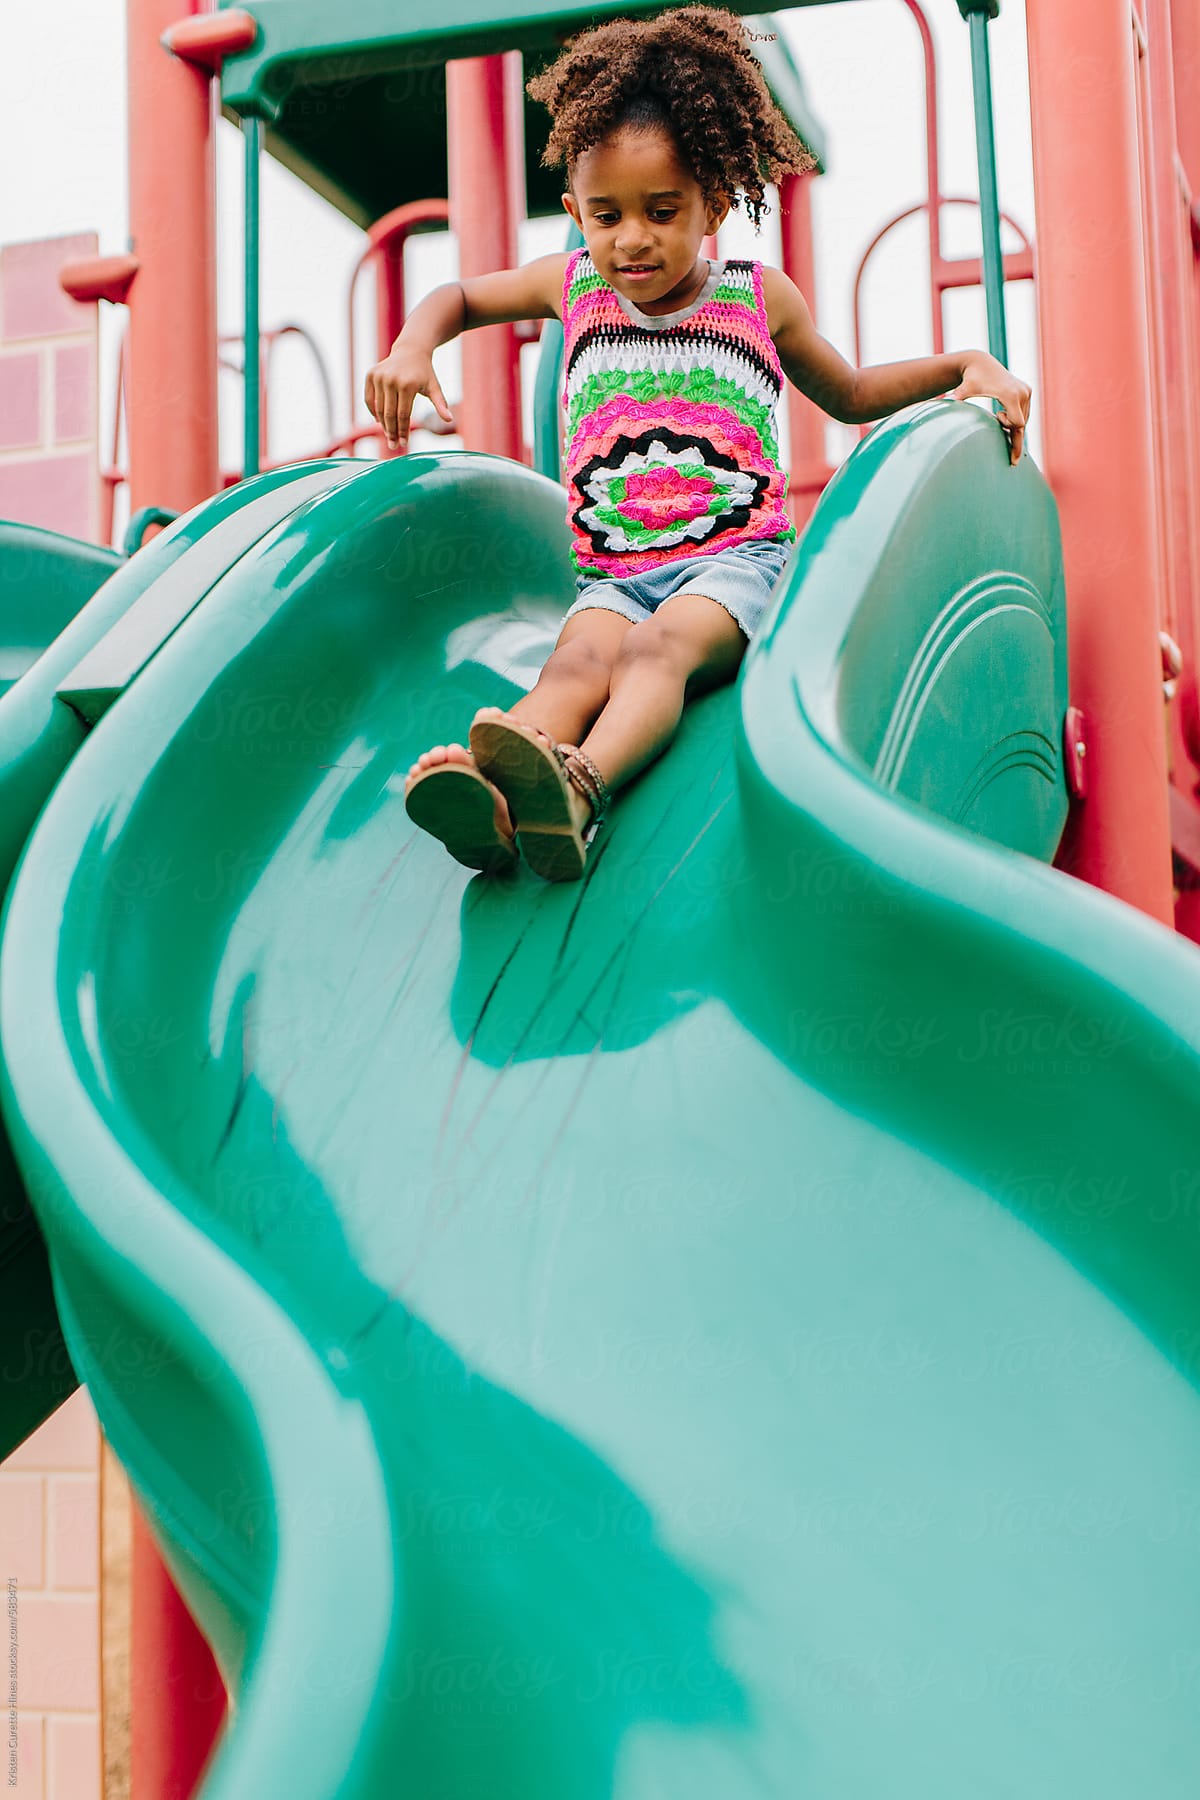 Cute little girl sliding down on slide in the playground 23059080